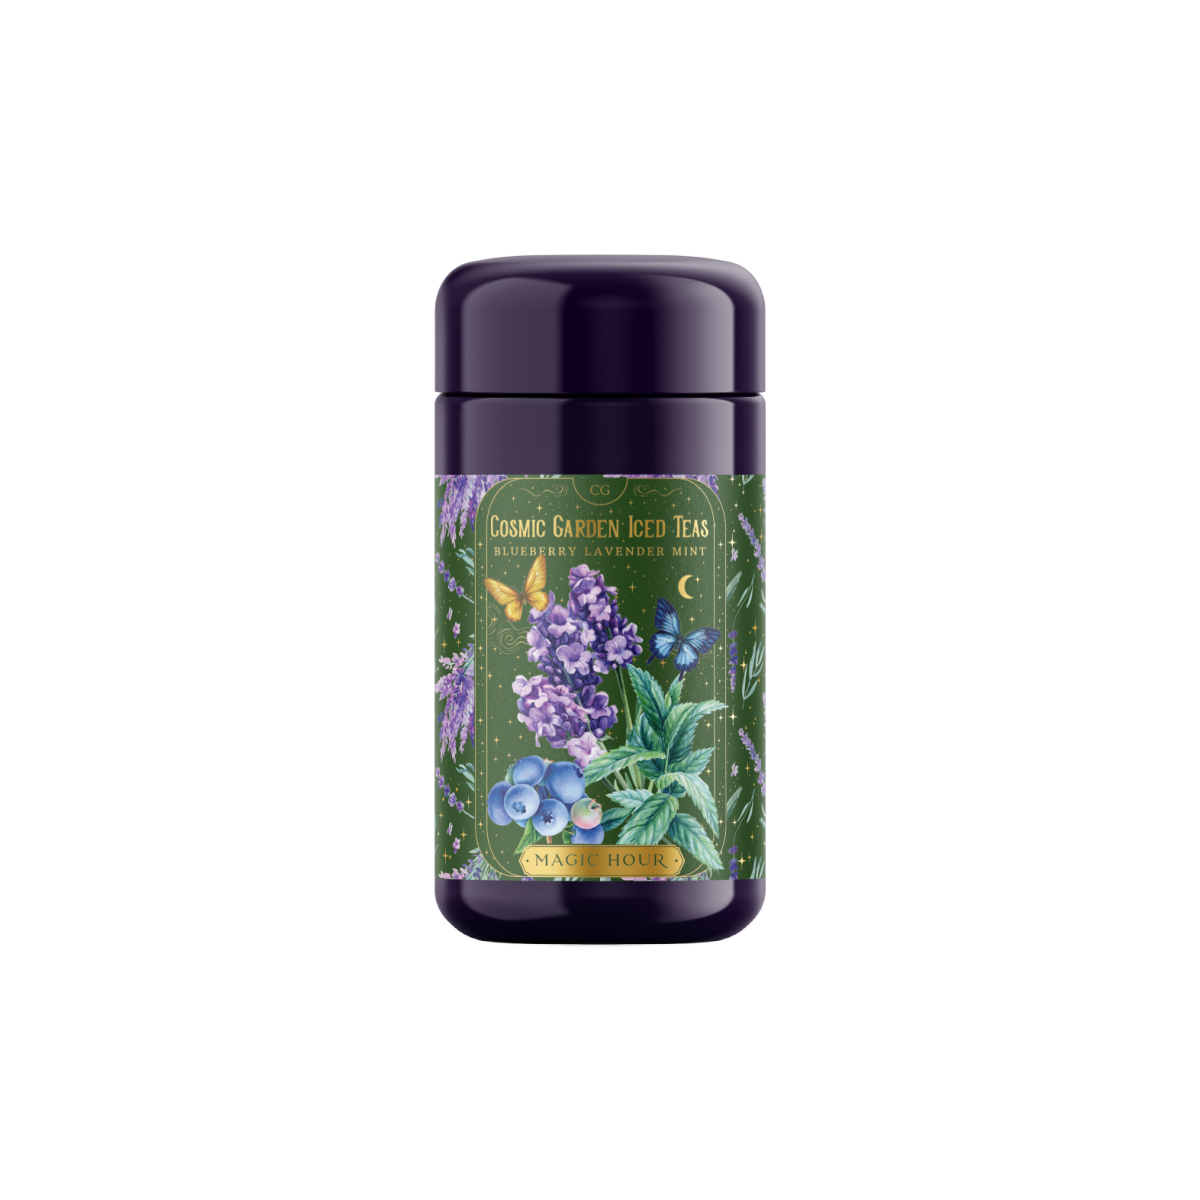 Blueberry Lavender Mint: Cosmic Garden Iced Tea